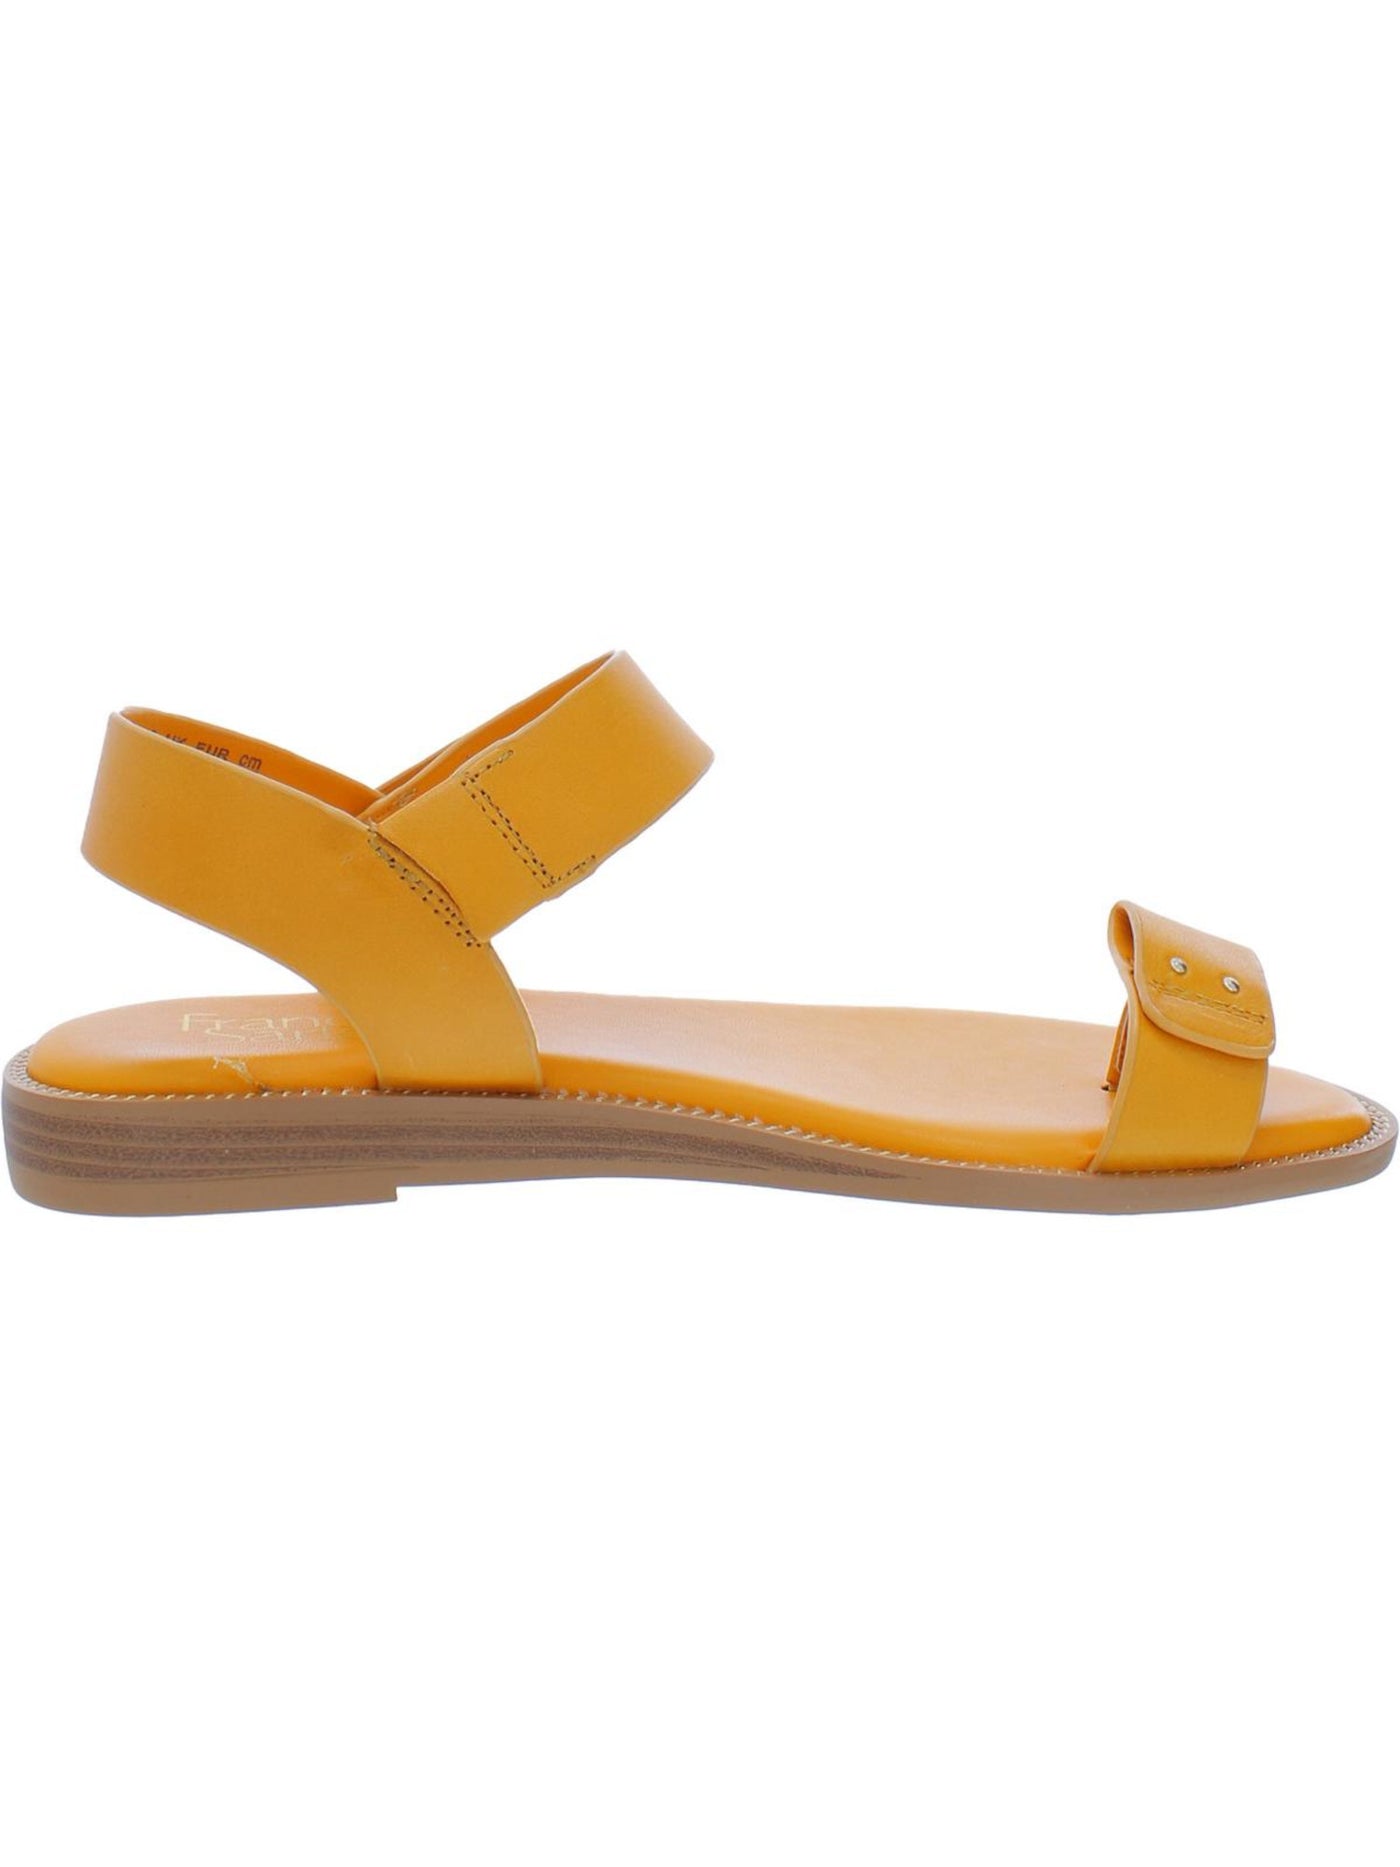 FRANCO SARTO Womens Orange Toe-Loop Chain Goring Cushioned Geranio Round Toe Slip On Leather Slingback Sandal 11 M